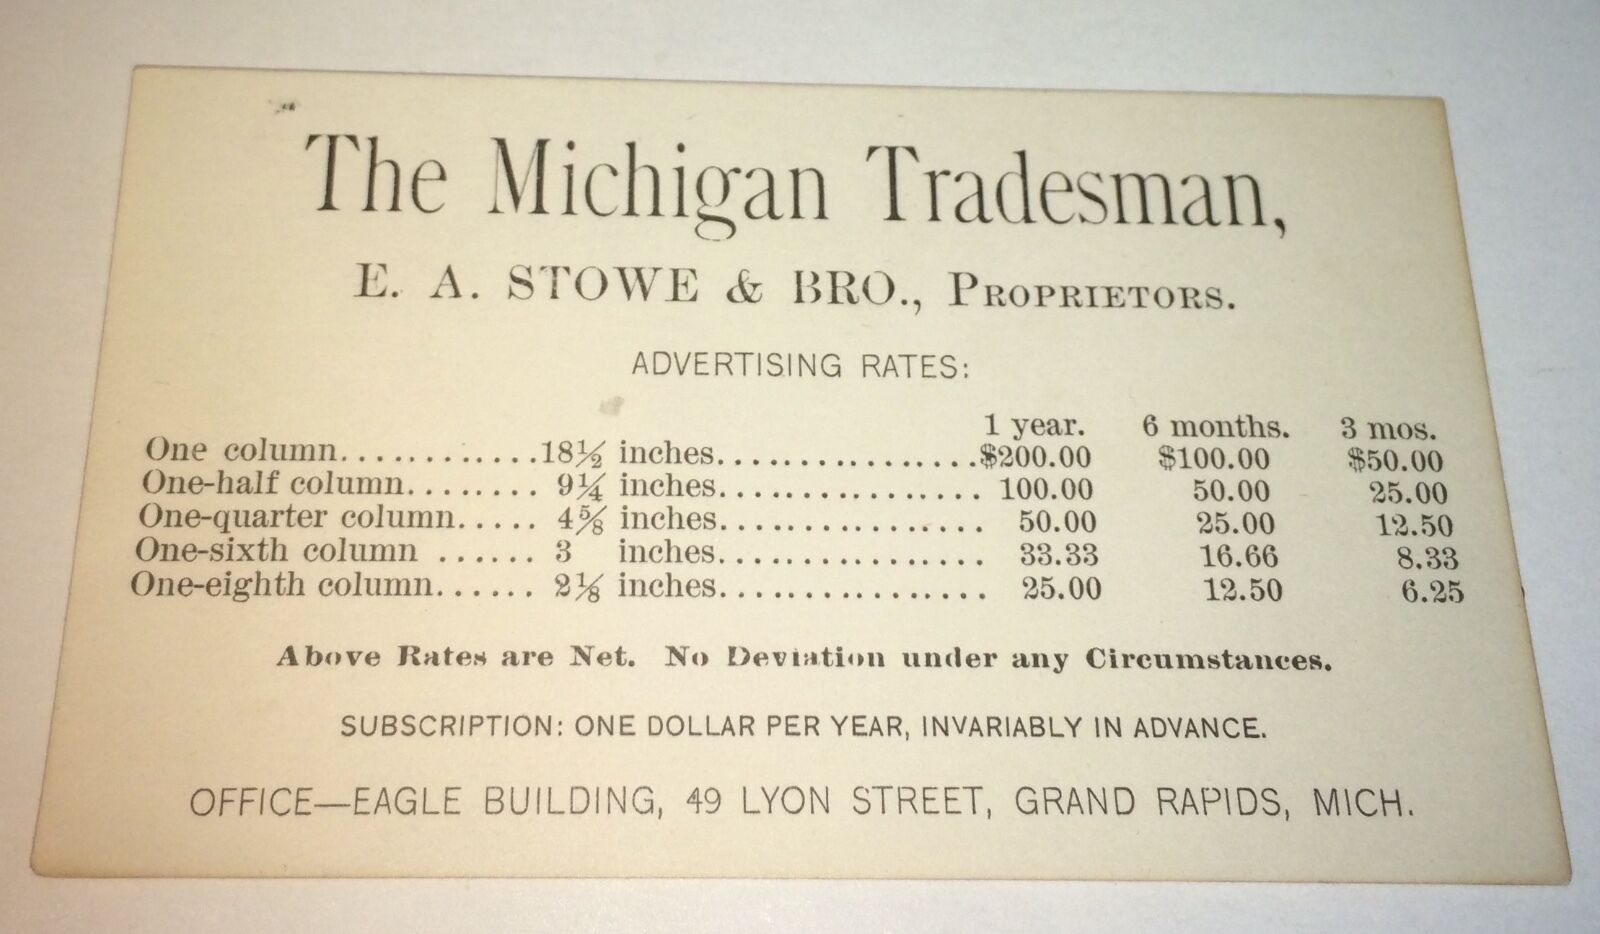 Rare Antique Victorian American Michigan Tradesman News Advertising Trade Card